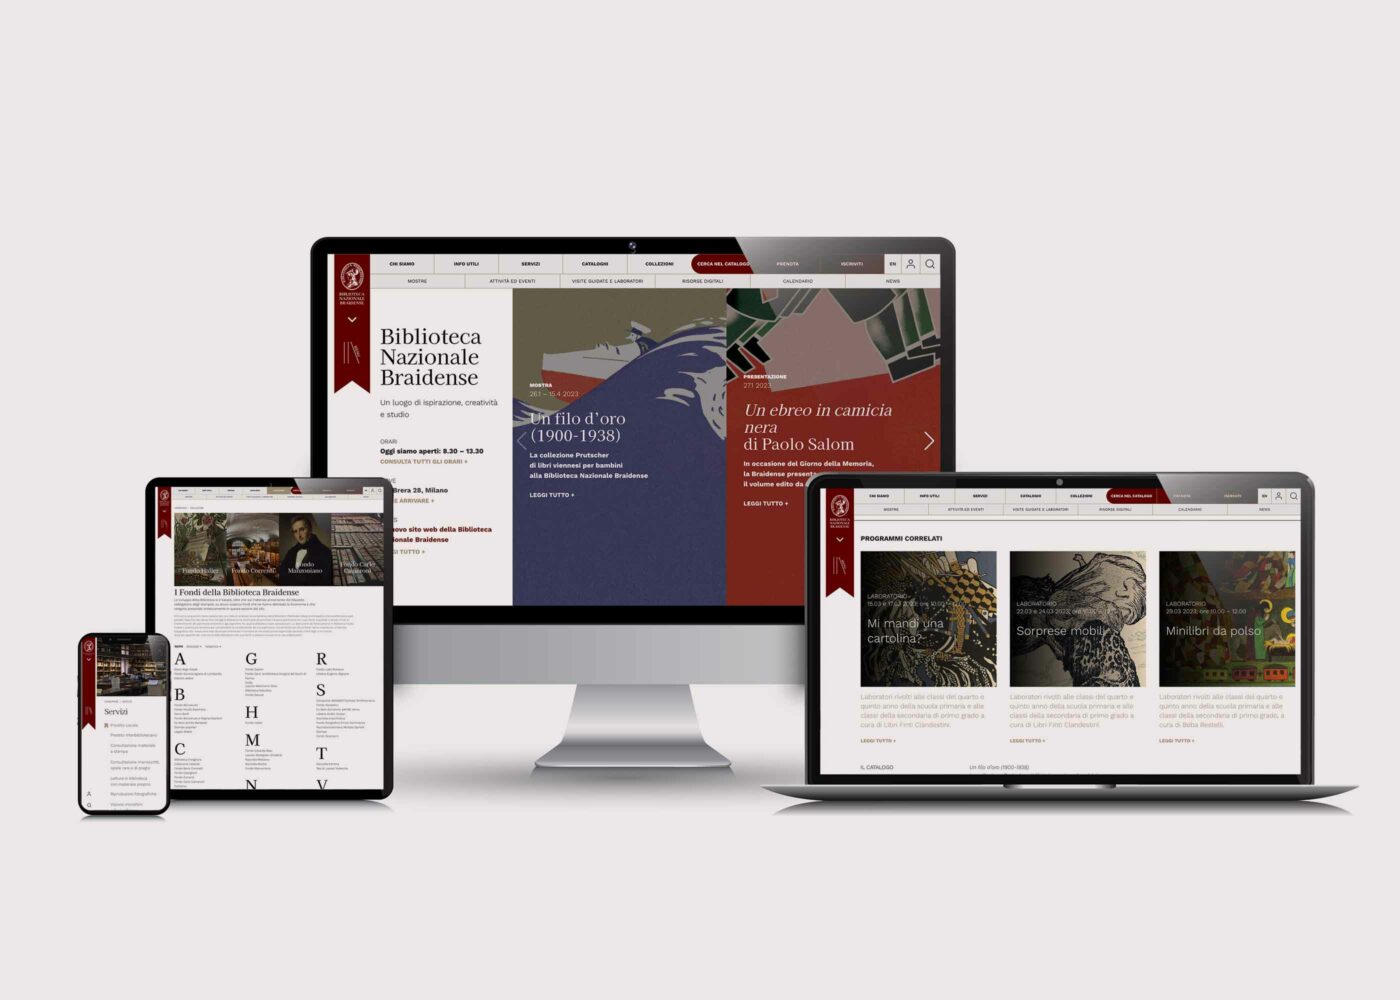 The new website of the Biblioteca Nazionale Braidense